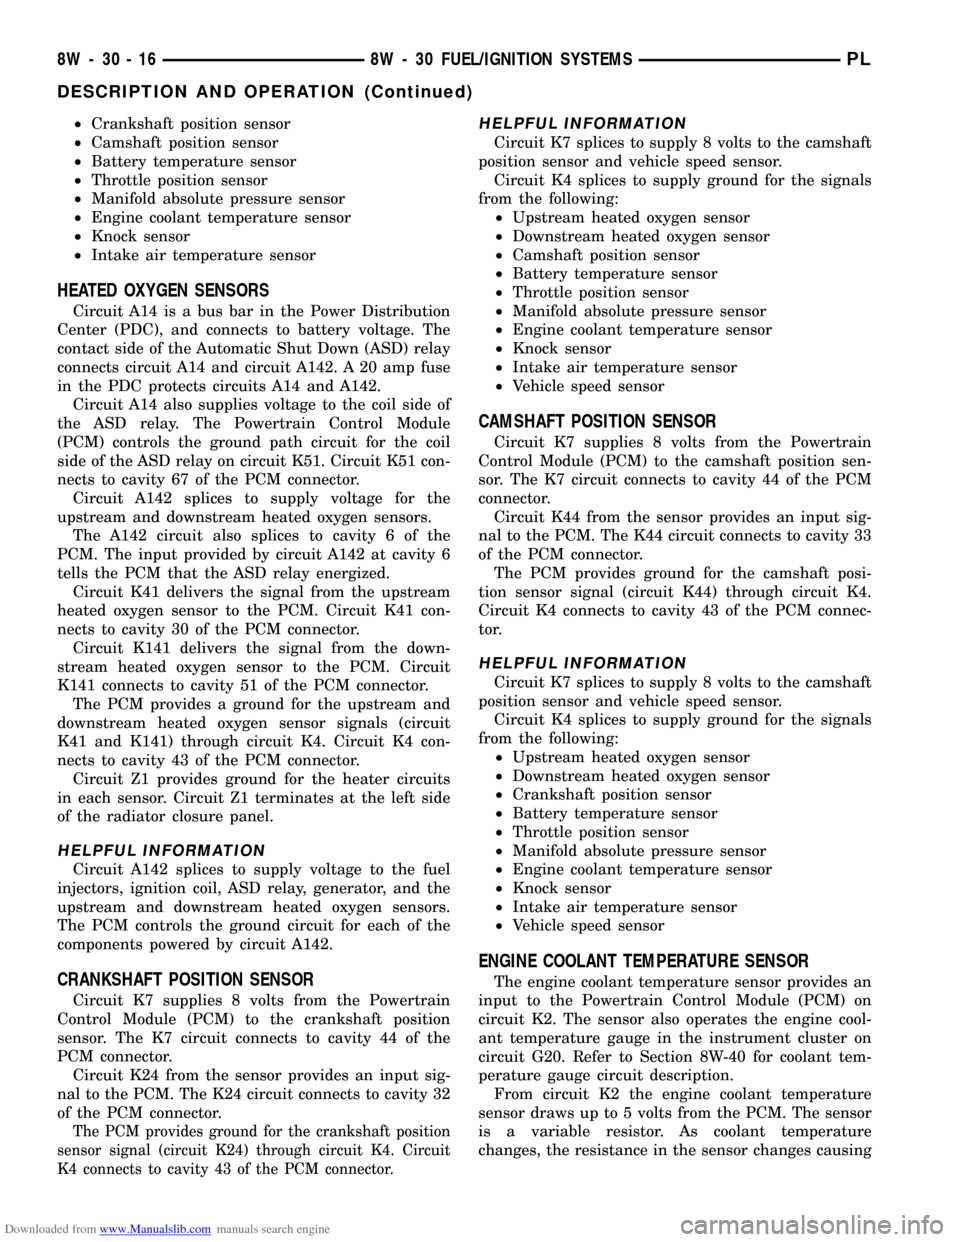 DODGE NEON 1997 1.G Wiring Diagrams Owners Guide Downloaded from www.Manualslib.com manuals search engine ²Crankshaft position sensor
²Camshaft position sensor
²Battery temperature sensor
²Throttle position sensor
²Manifold absolute pressure se